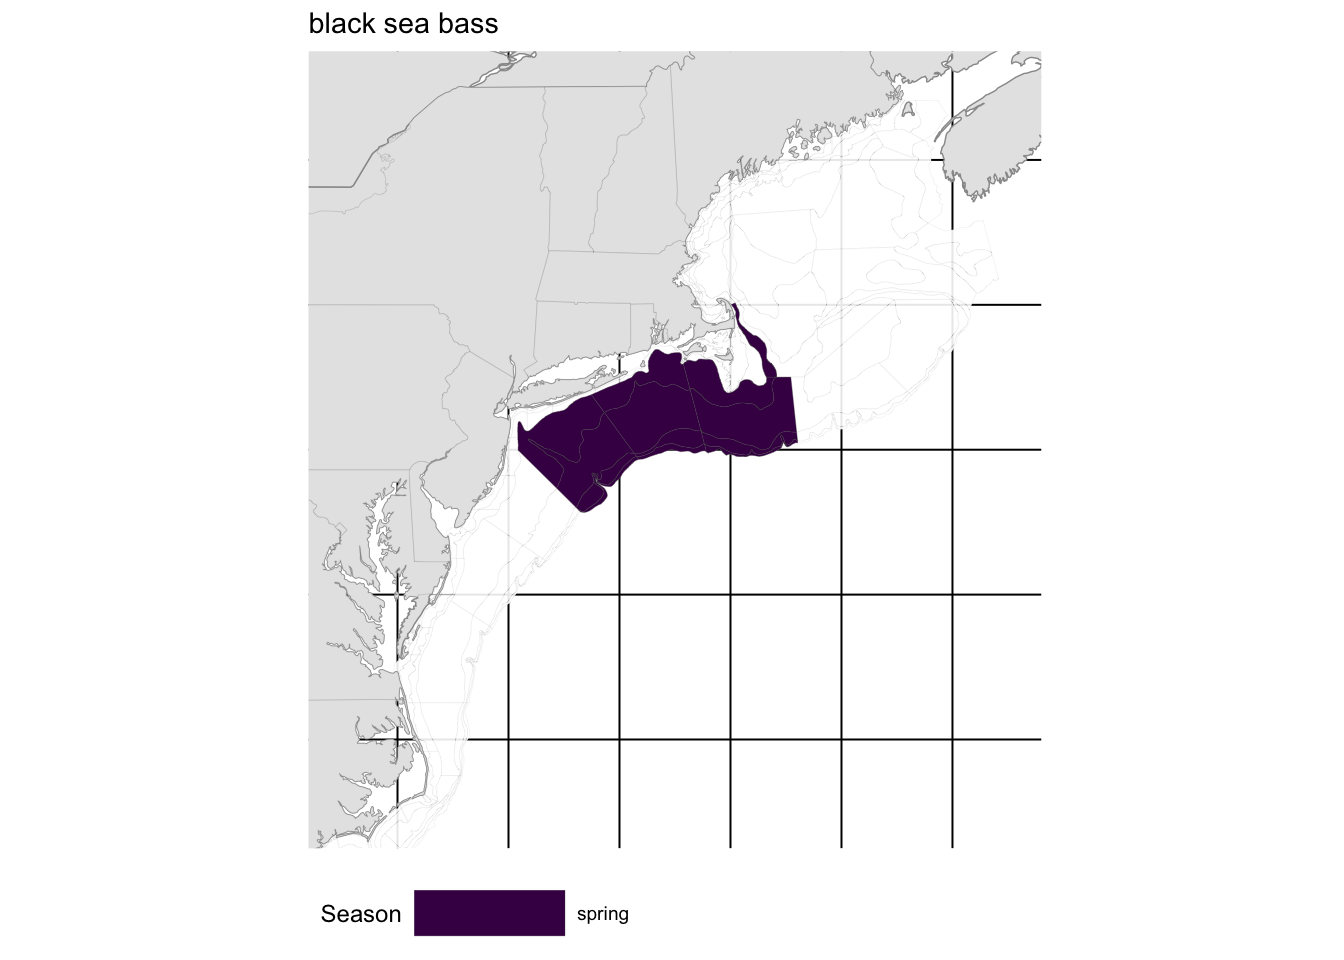 Strata map for the northern component of the black sea bass (*Centropristis striata*) stock on the NE shelf.